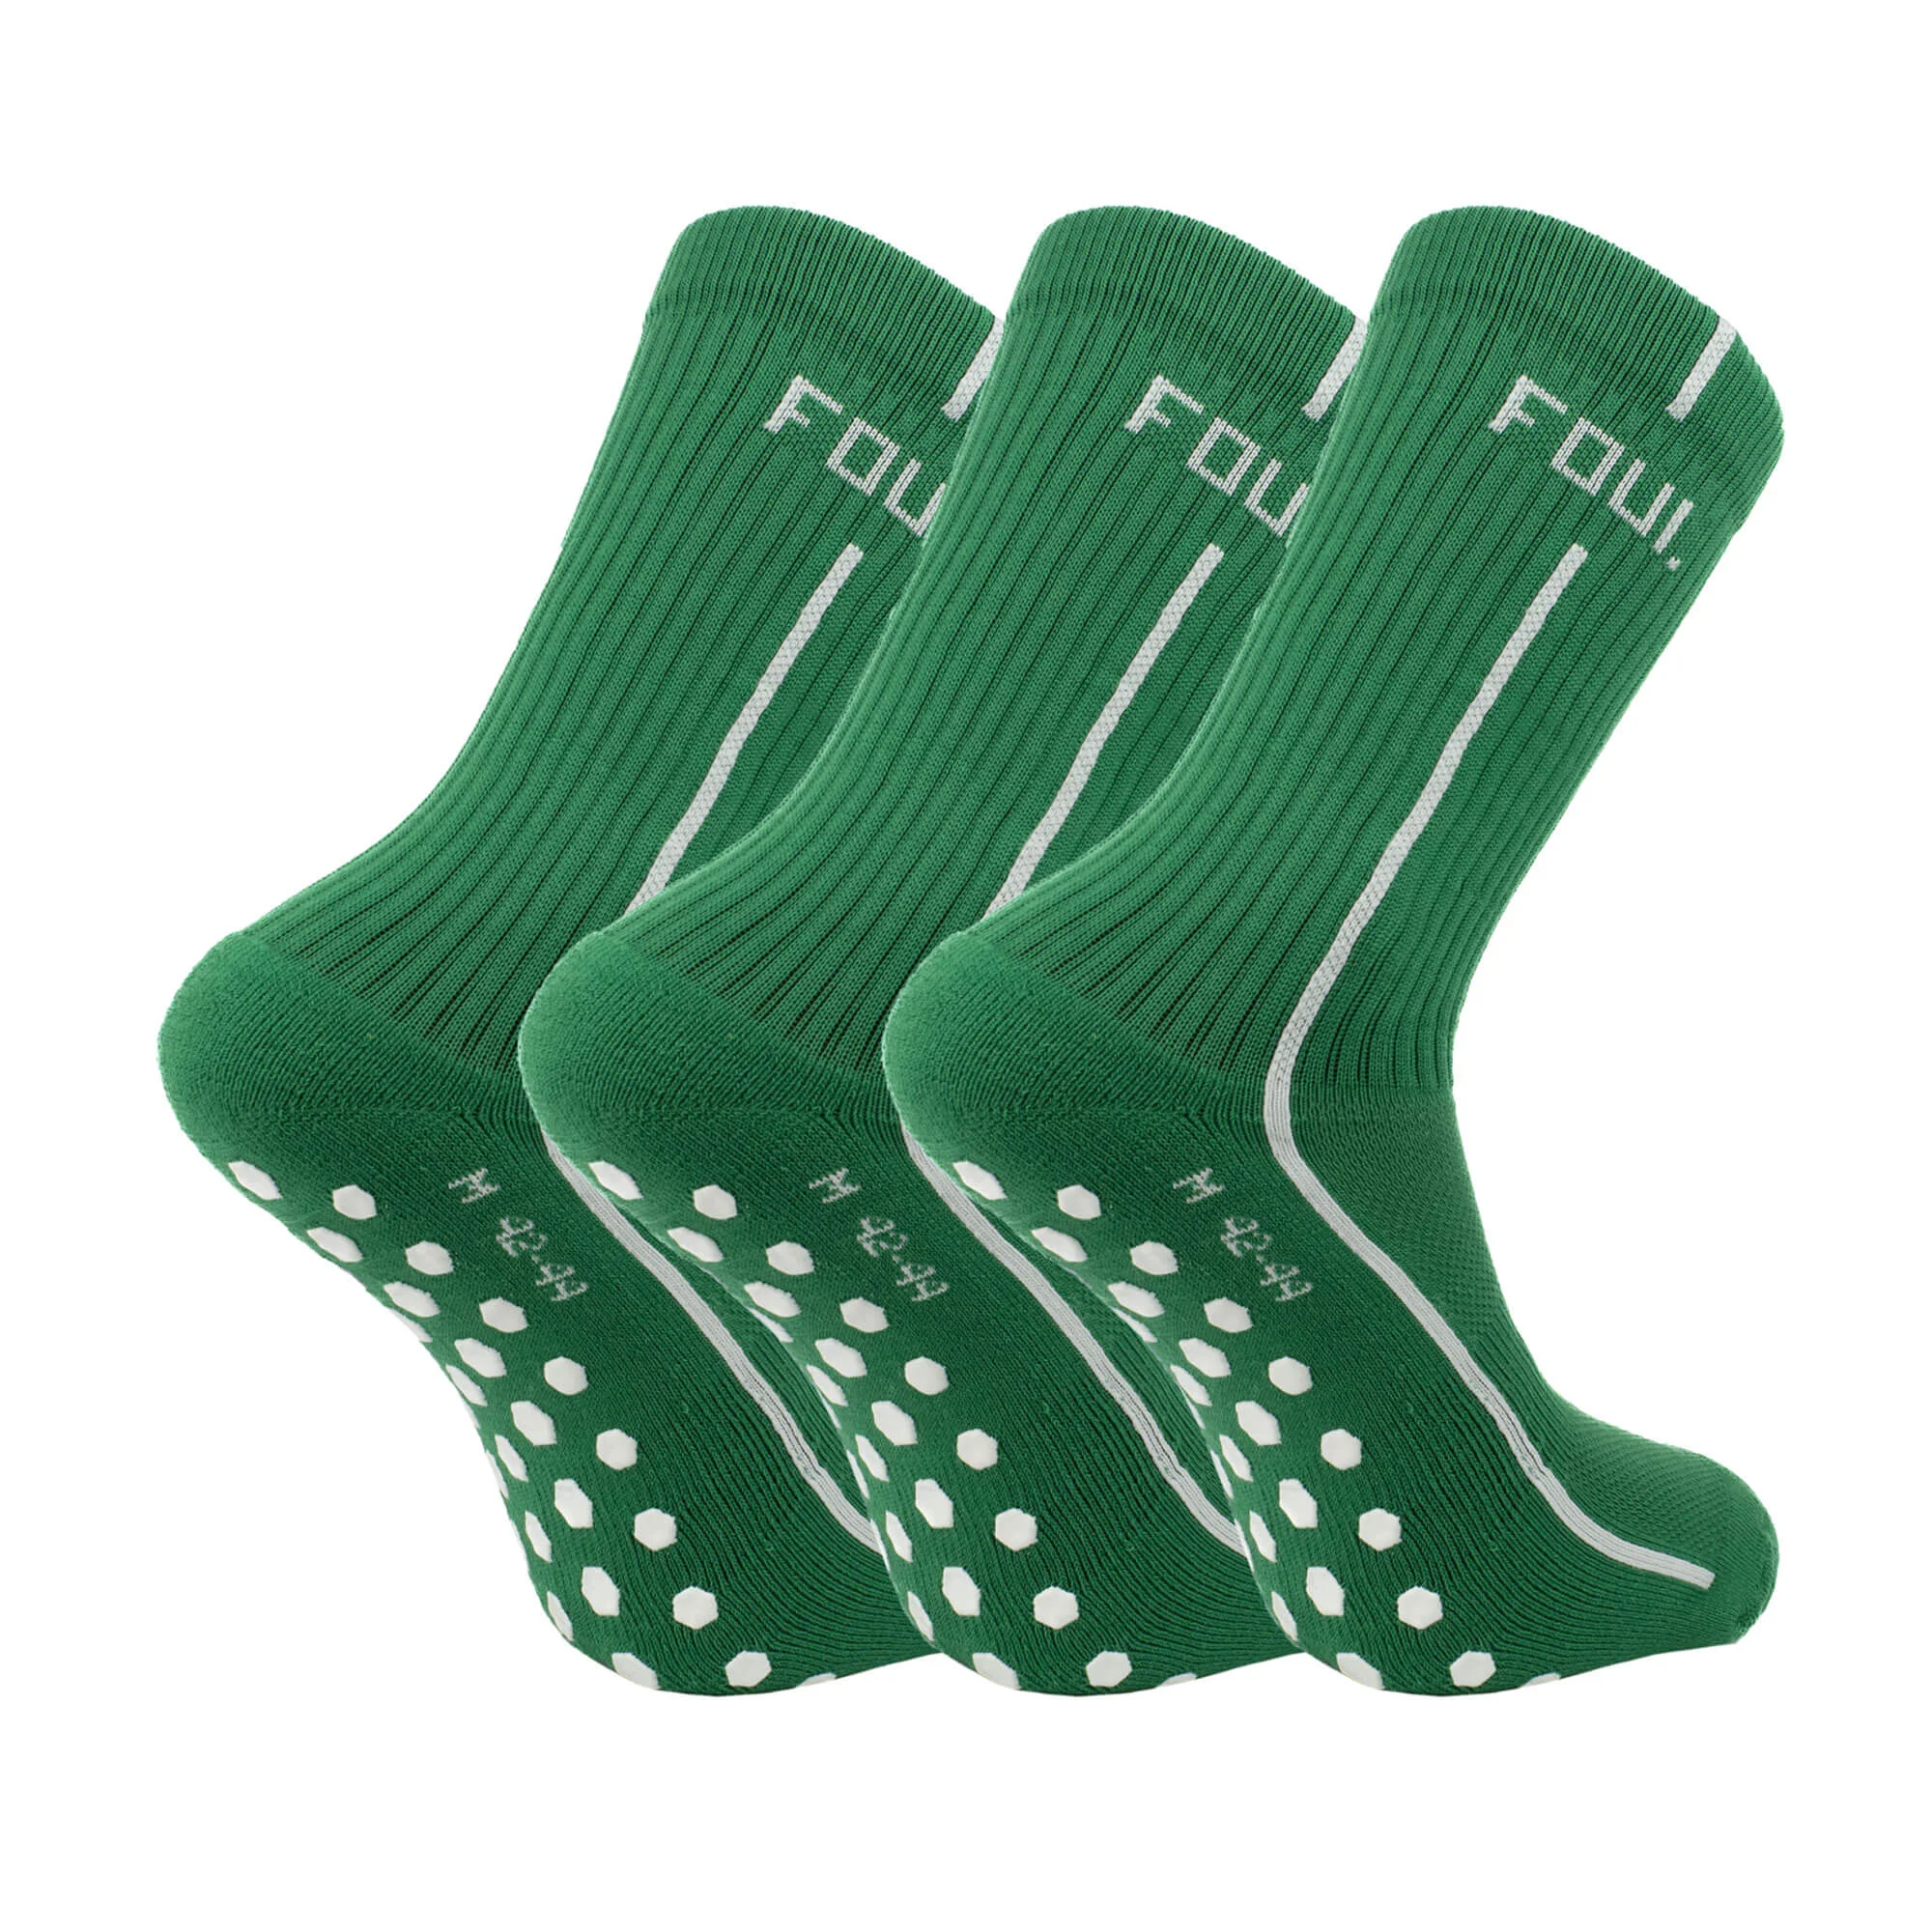 Green Football Socks, Grip Socks